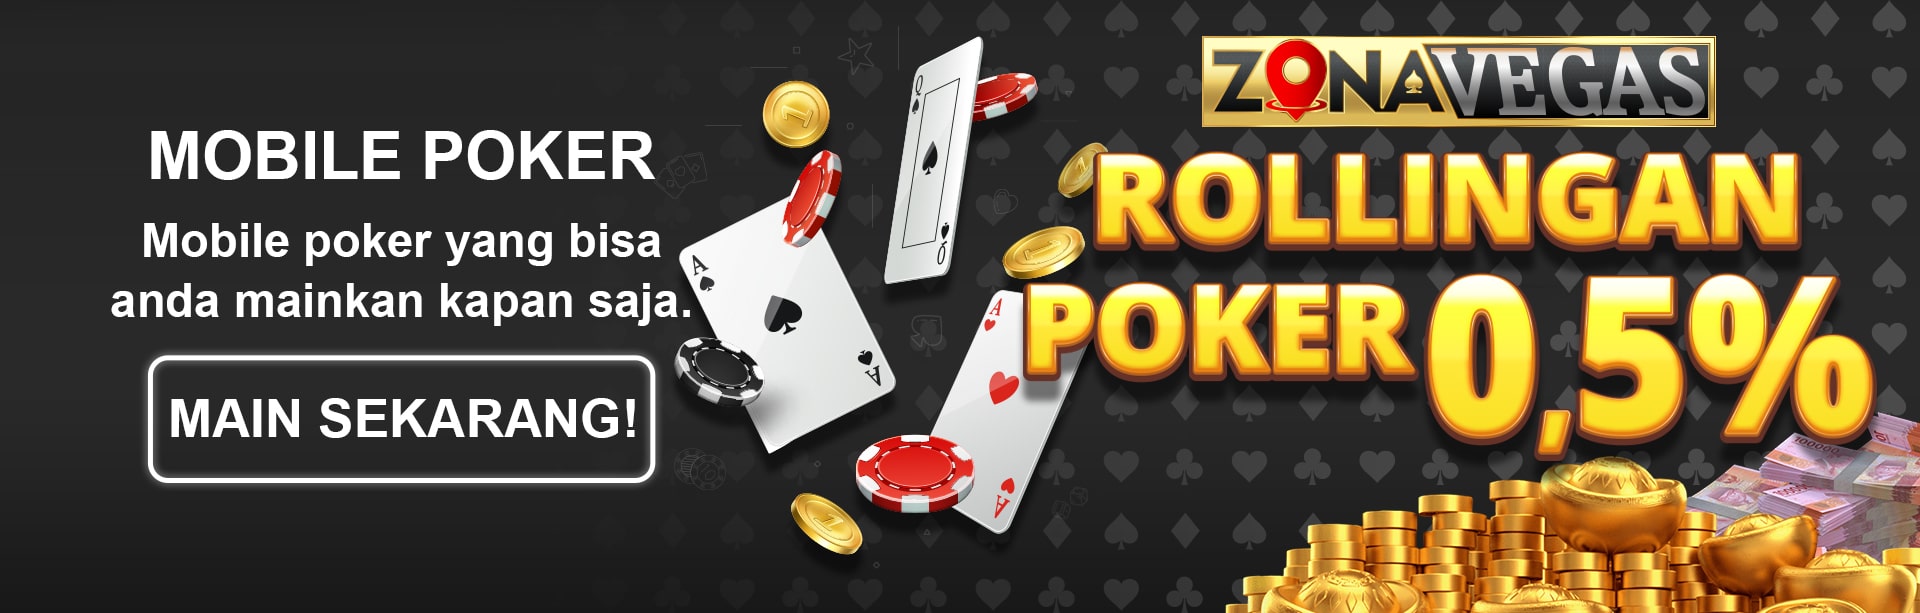 Bonus Cashback Rollingan Poker Zonavegas